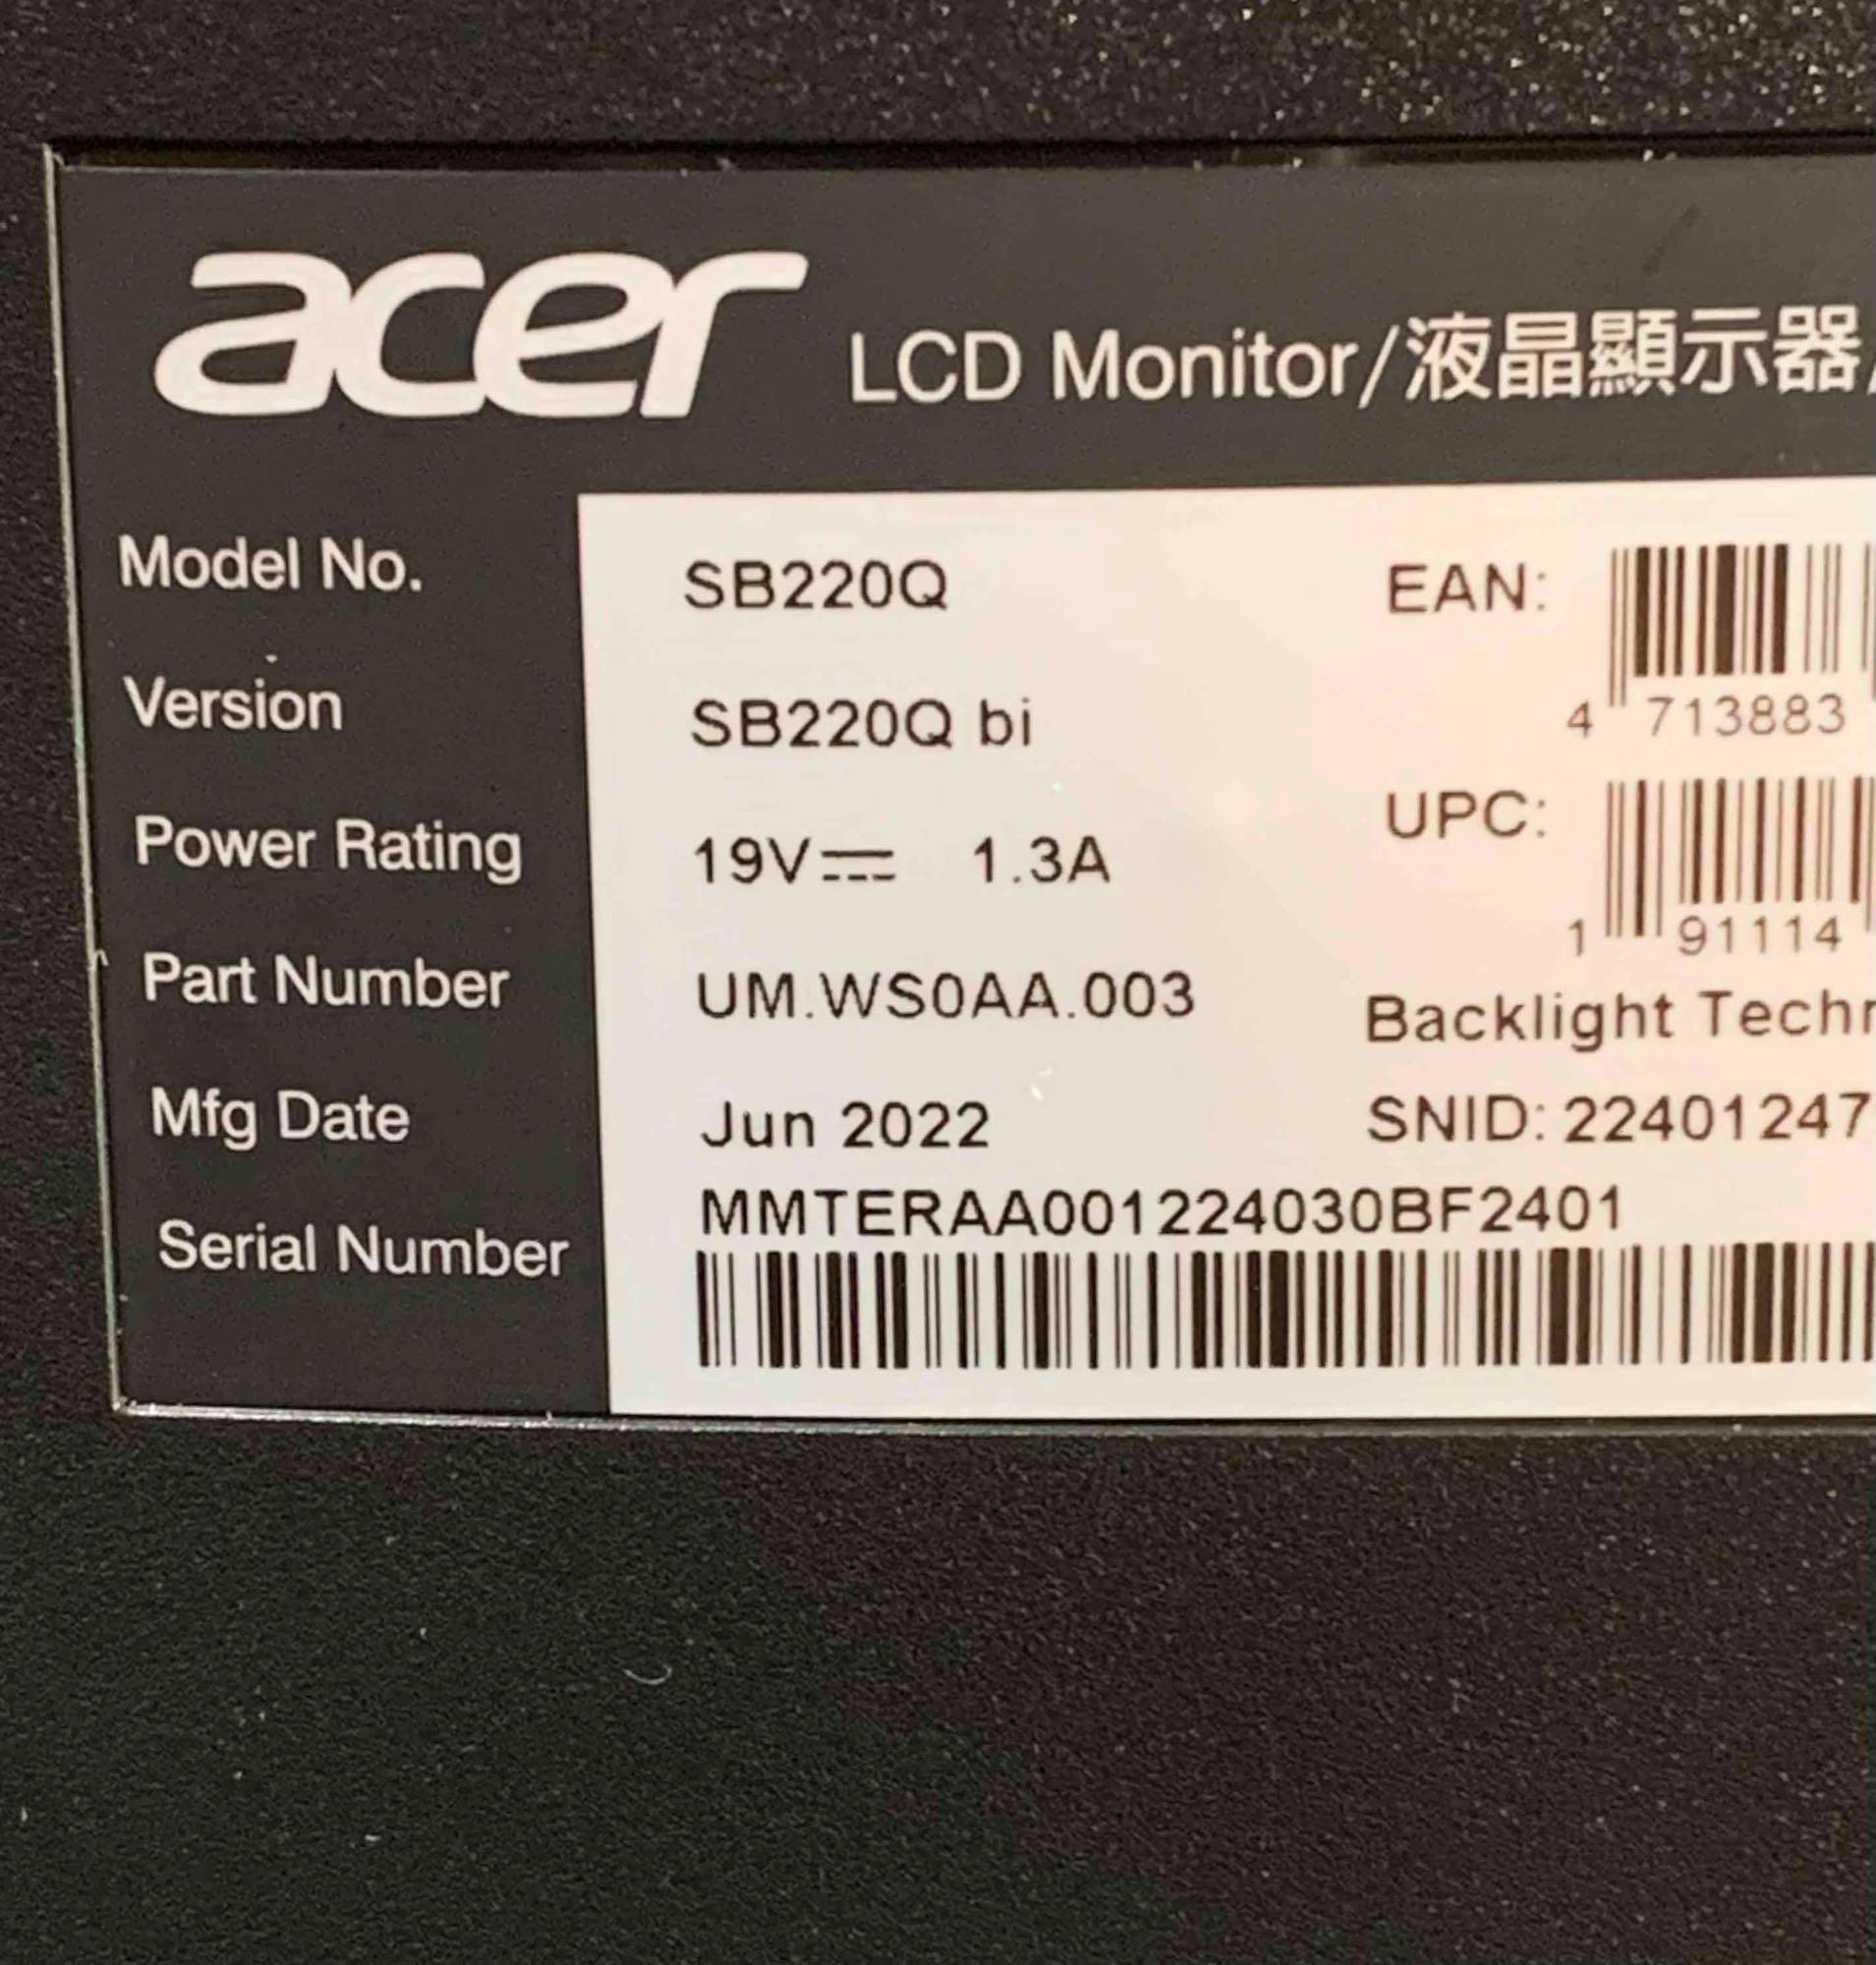 Acer 21.5 Inch Full HD (1920 x 1080)